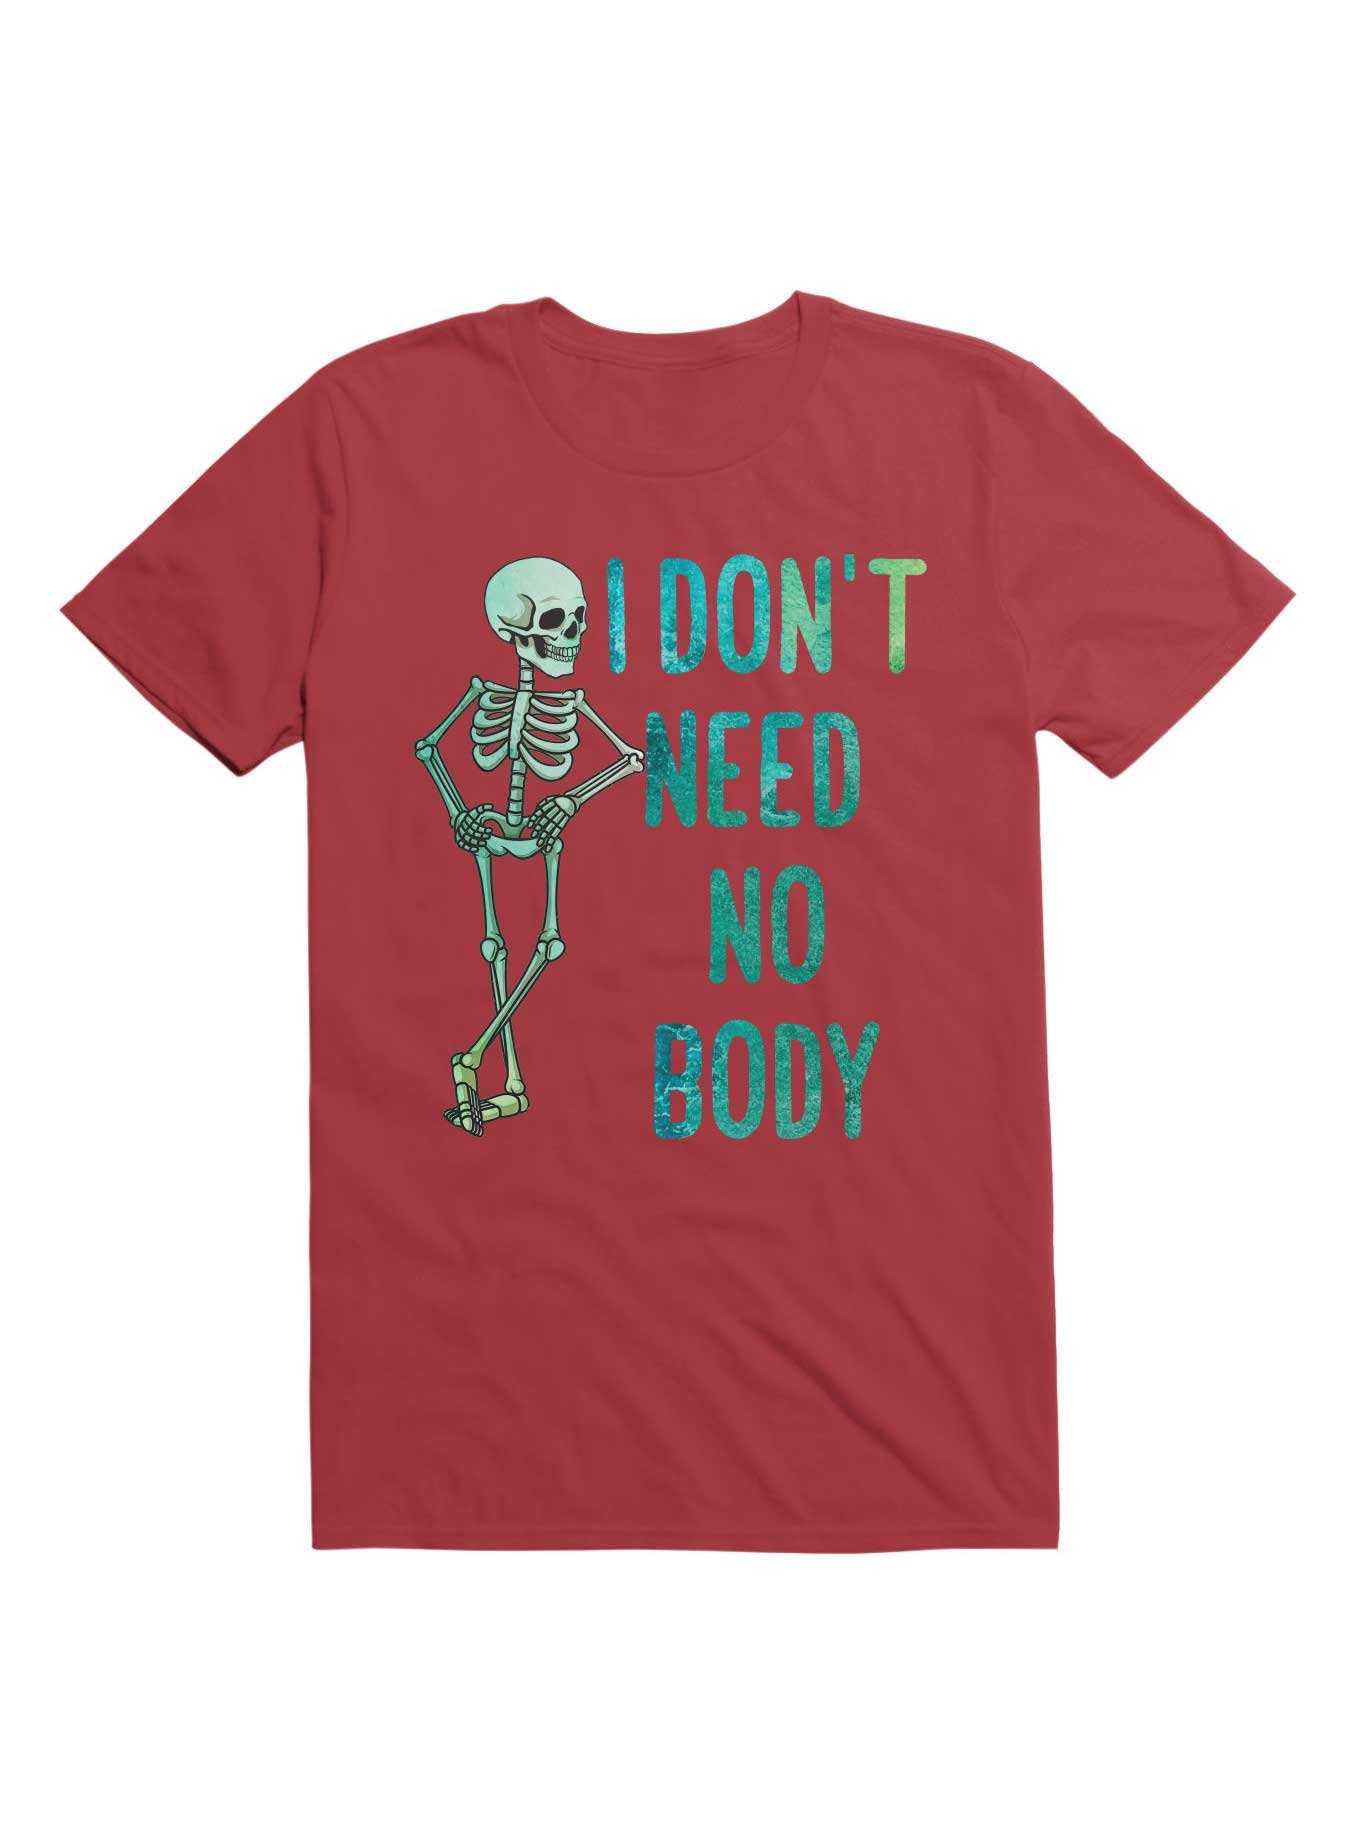 I Don't Need No Body Skeleton T-Shirt, , hi-res